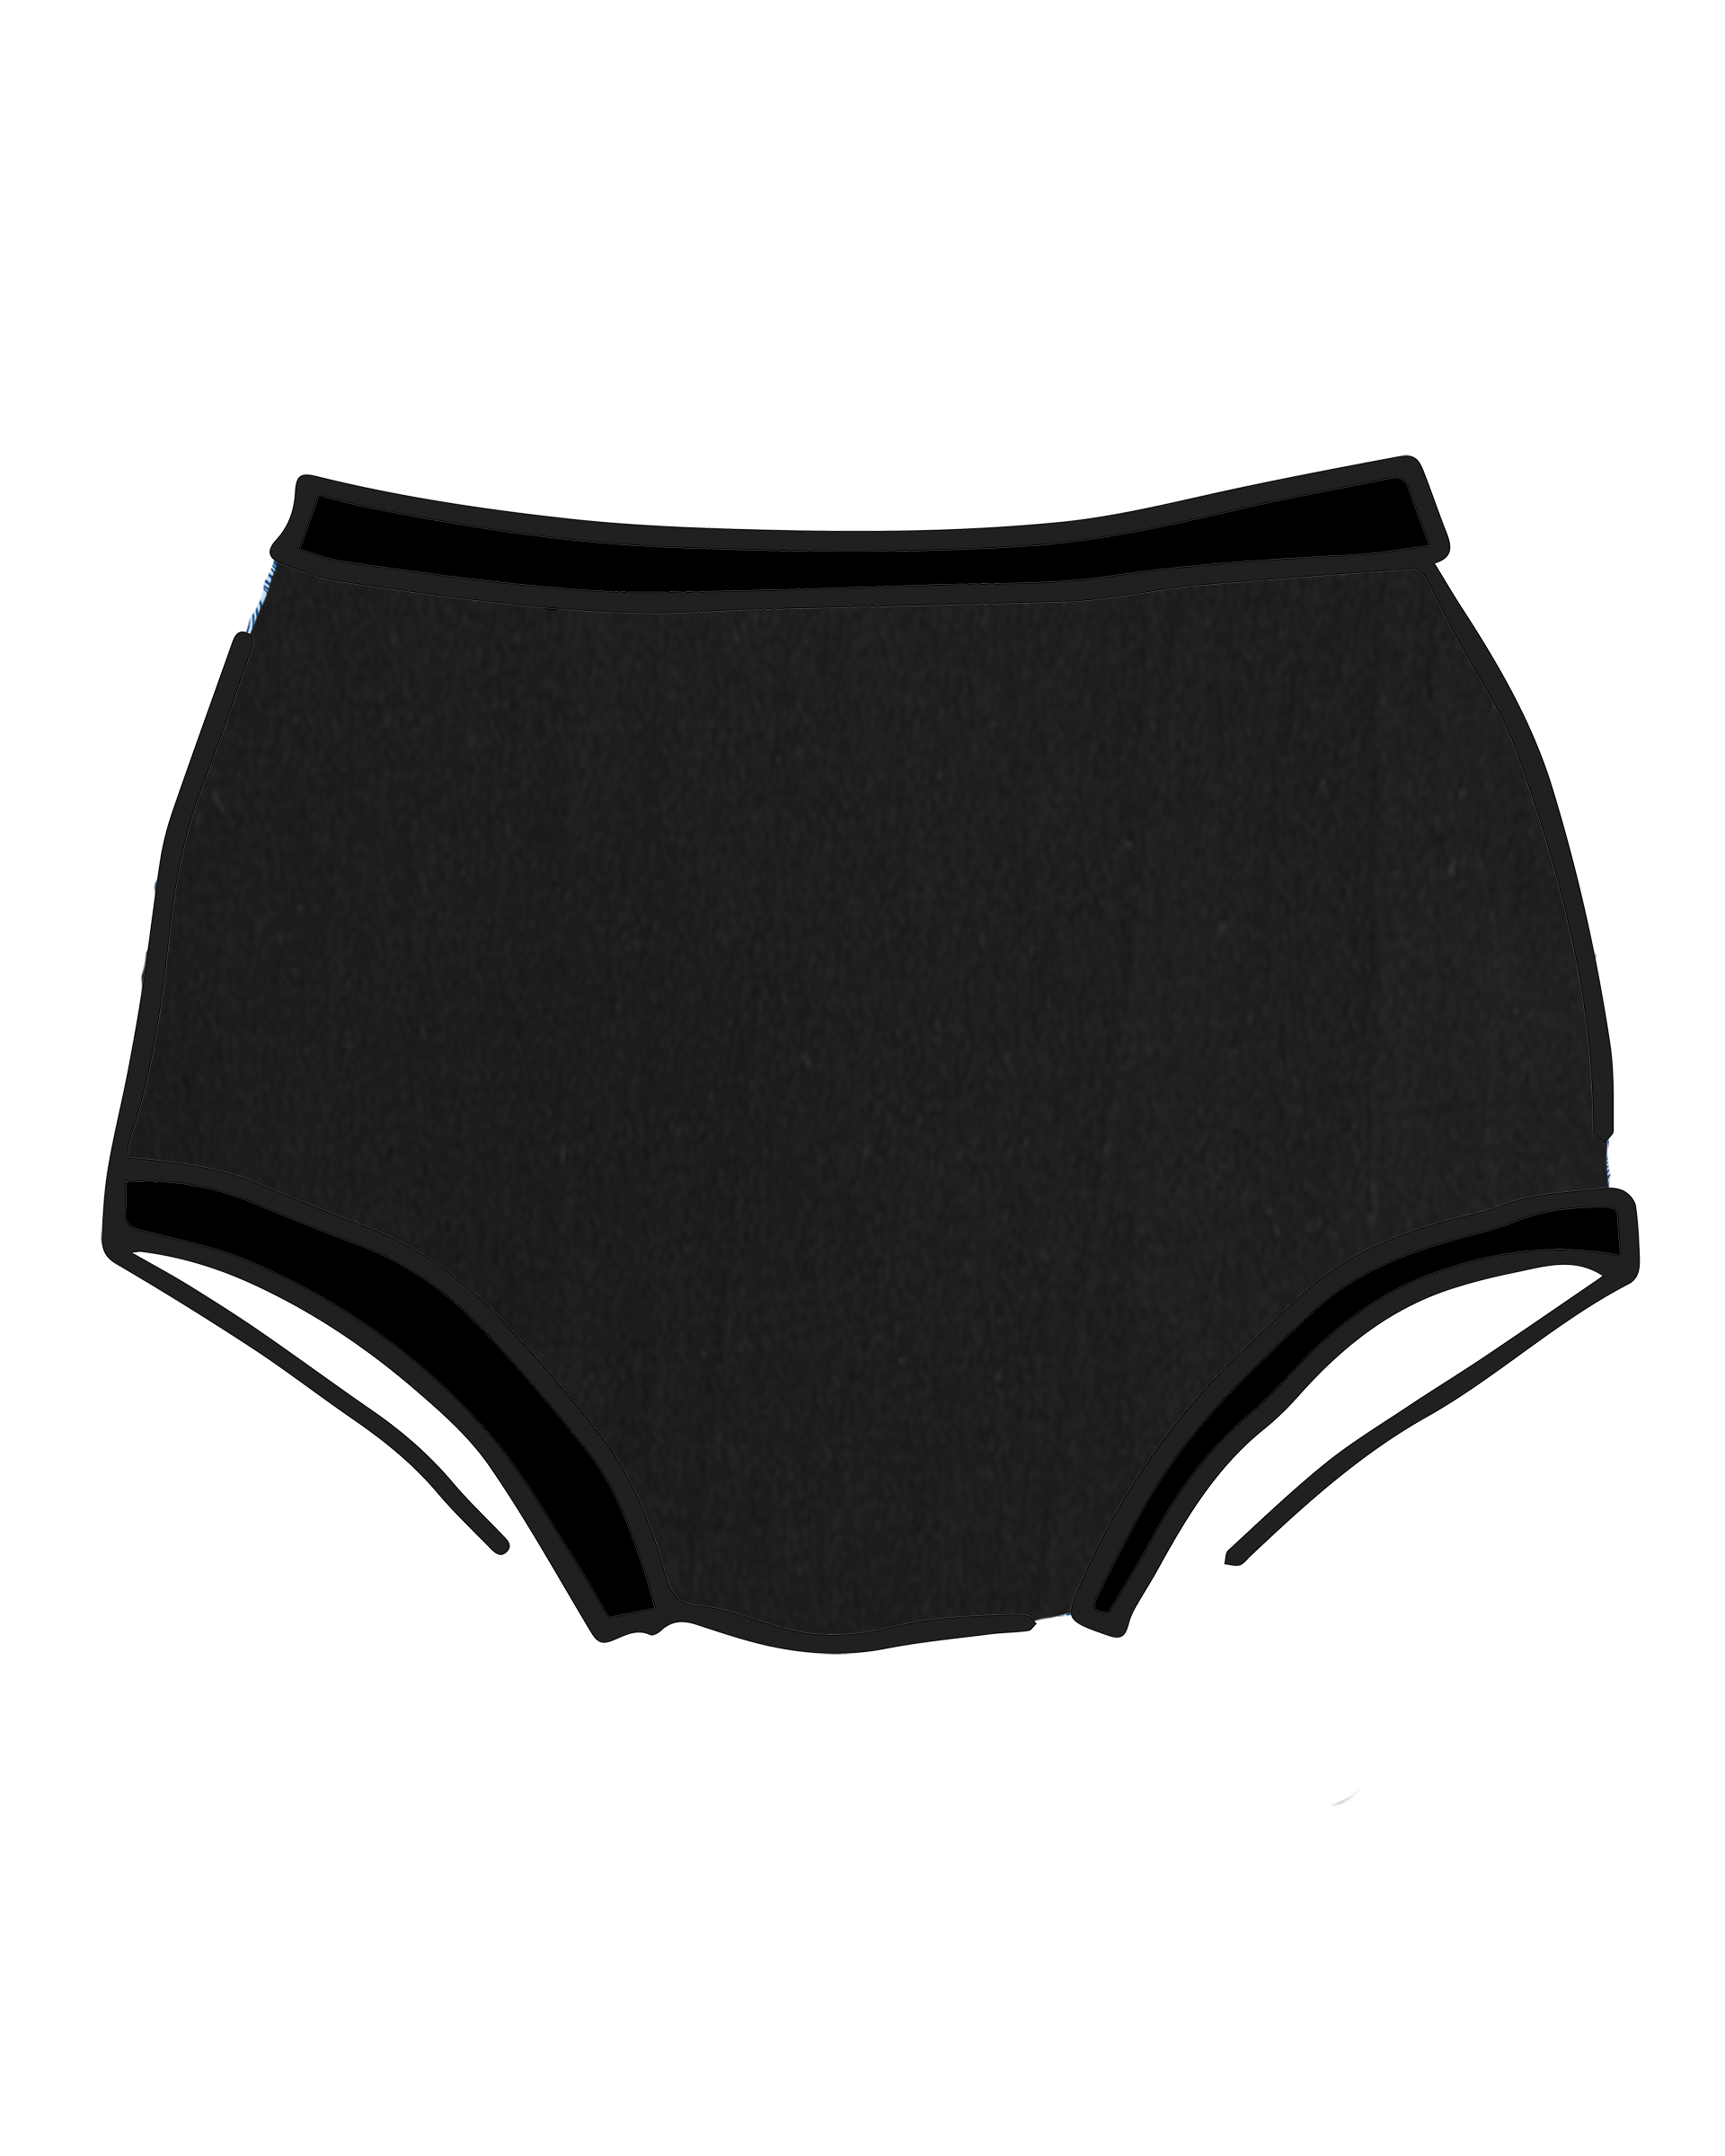 Drawing of Thunderpants Original style underwear in Plain Black.